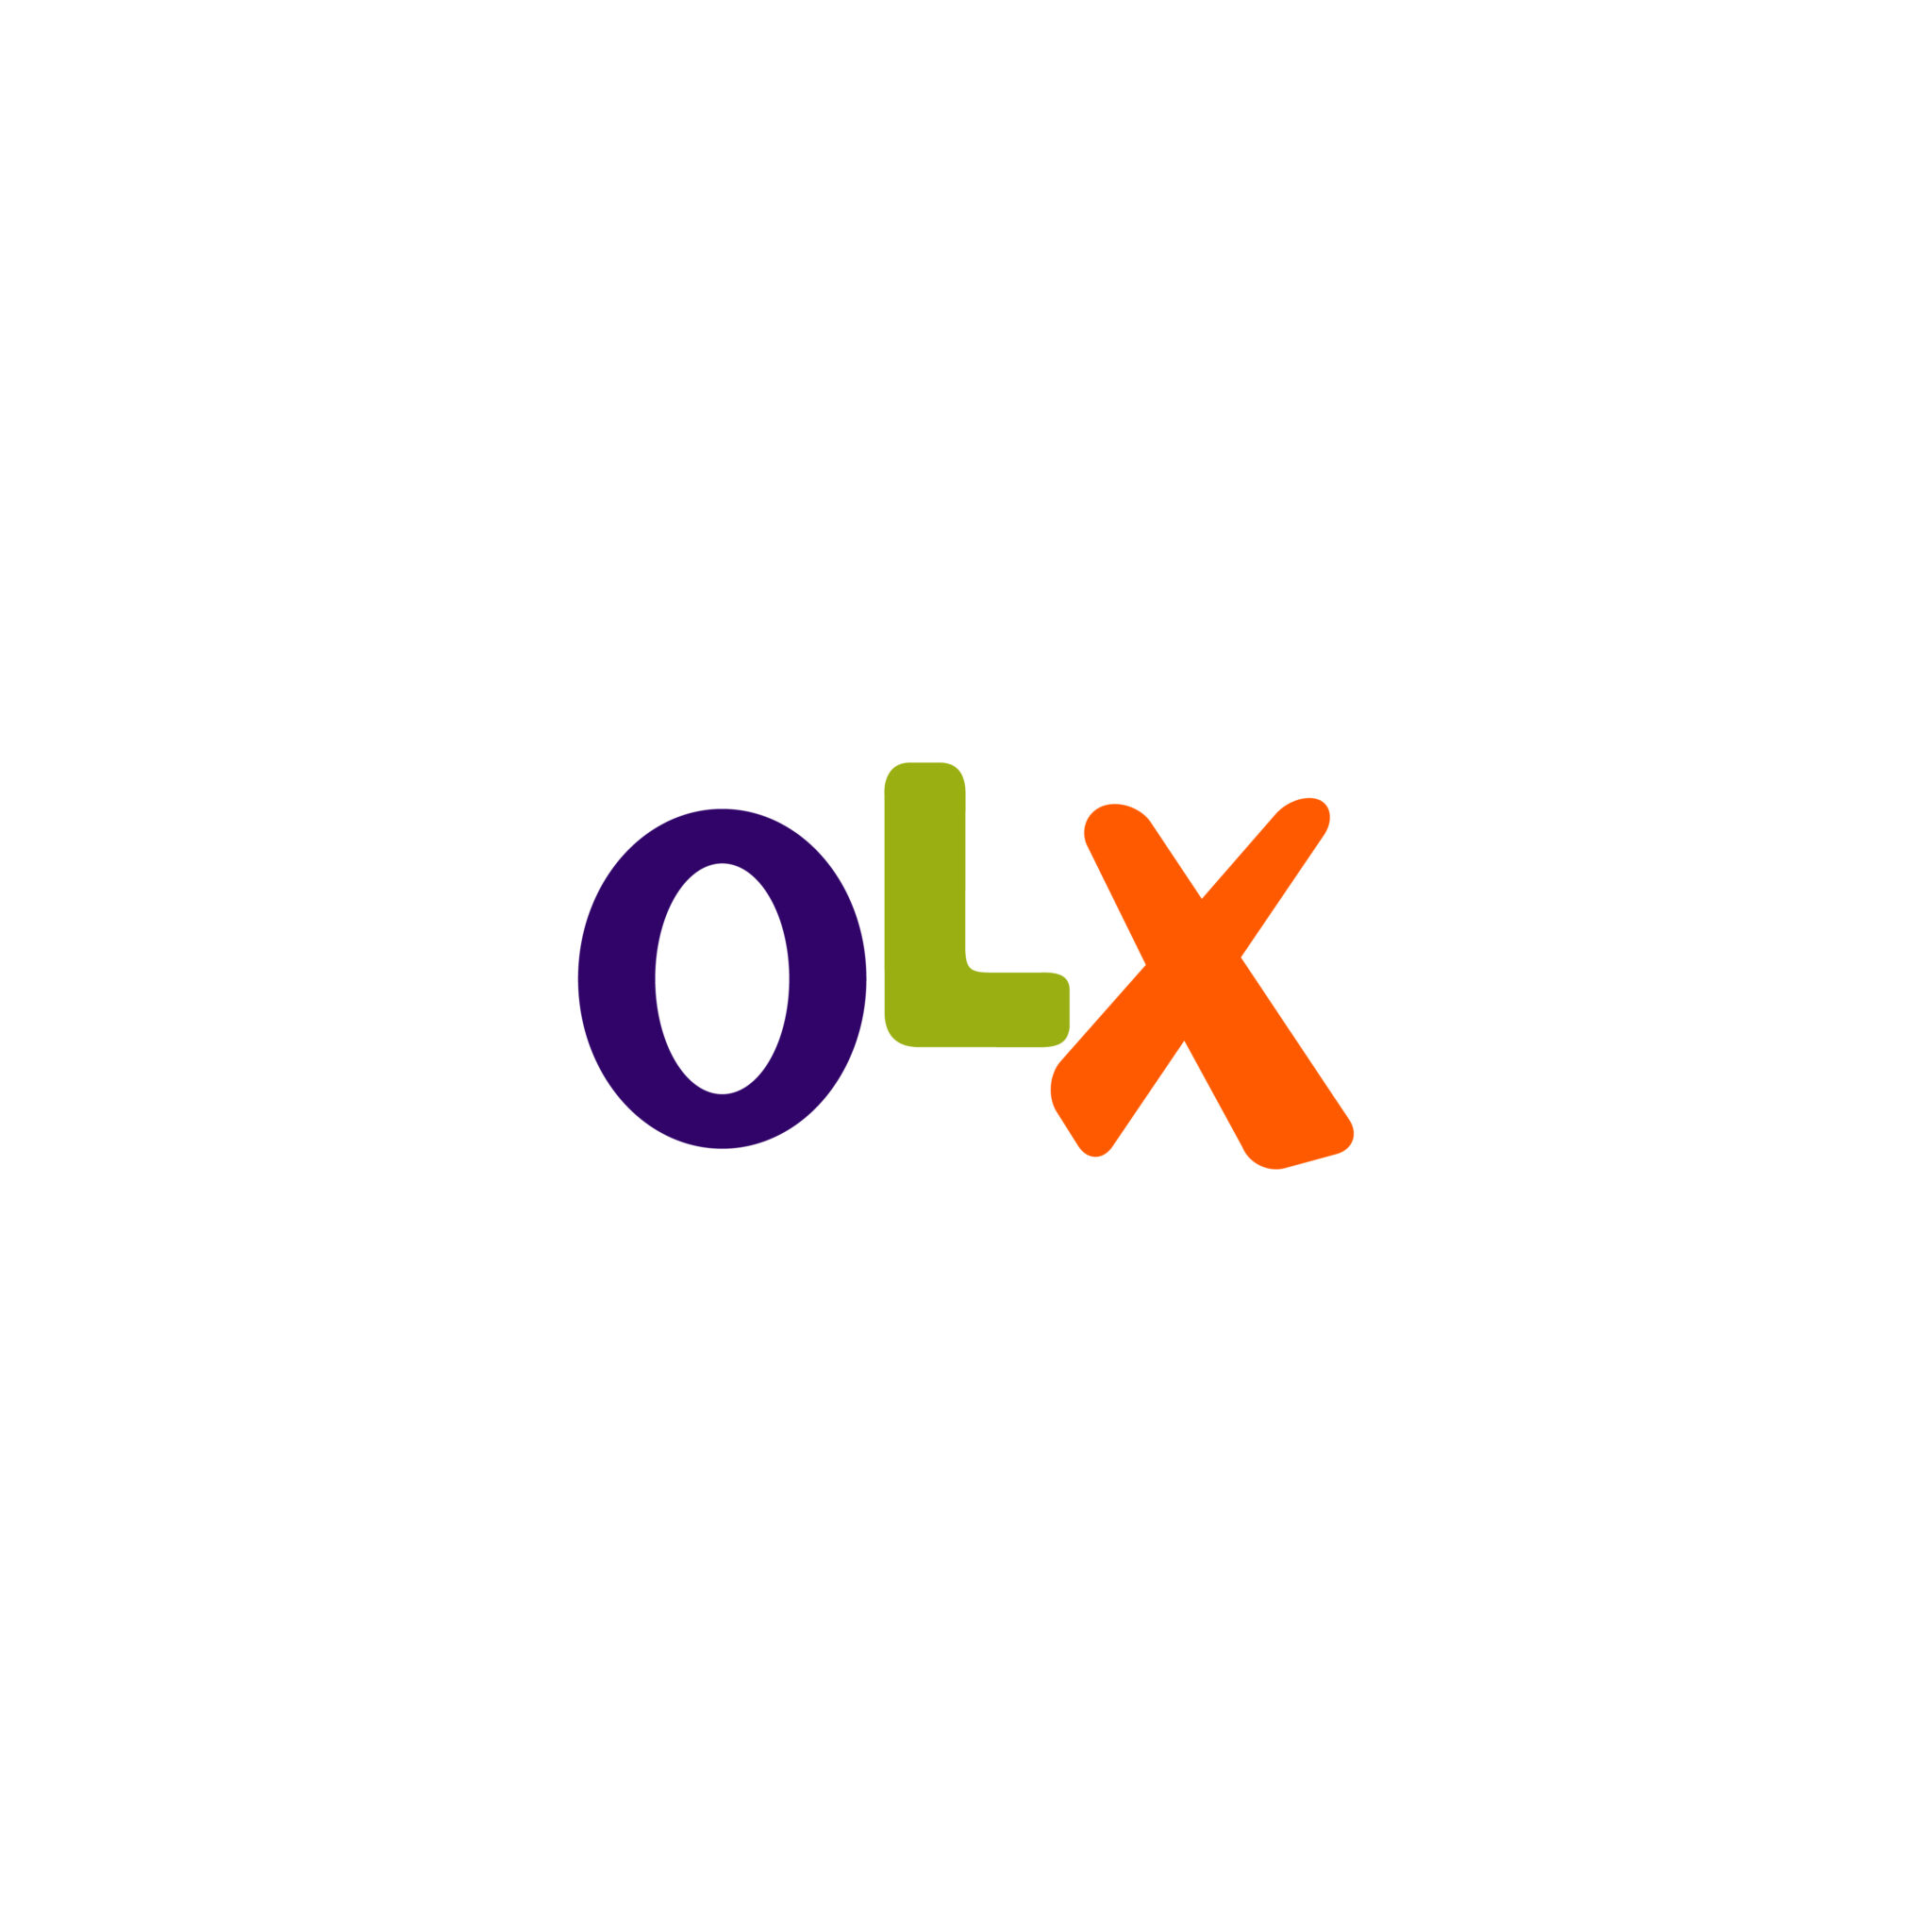  Olx  logo  vector Vector Seek